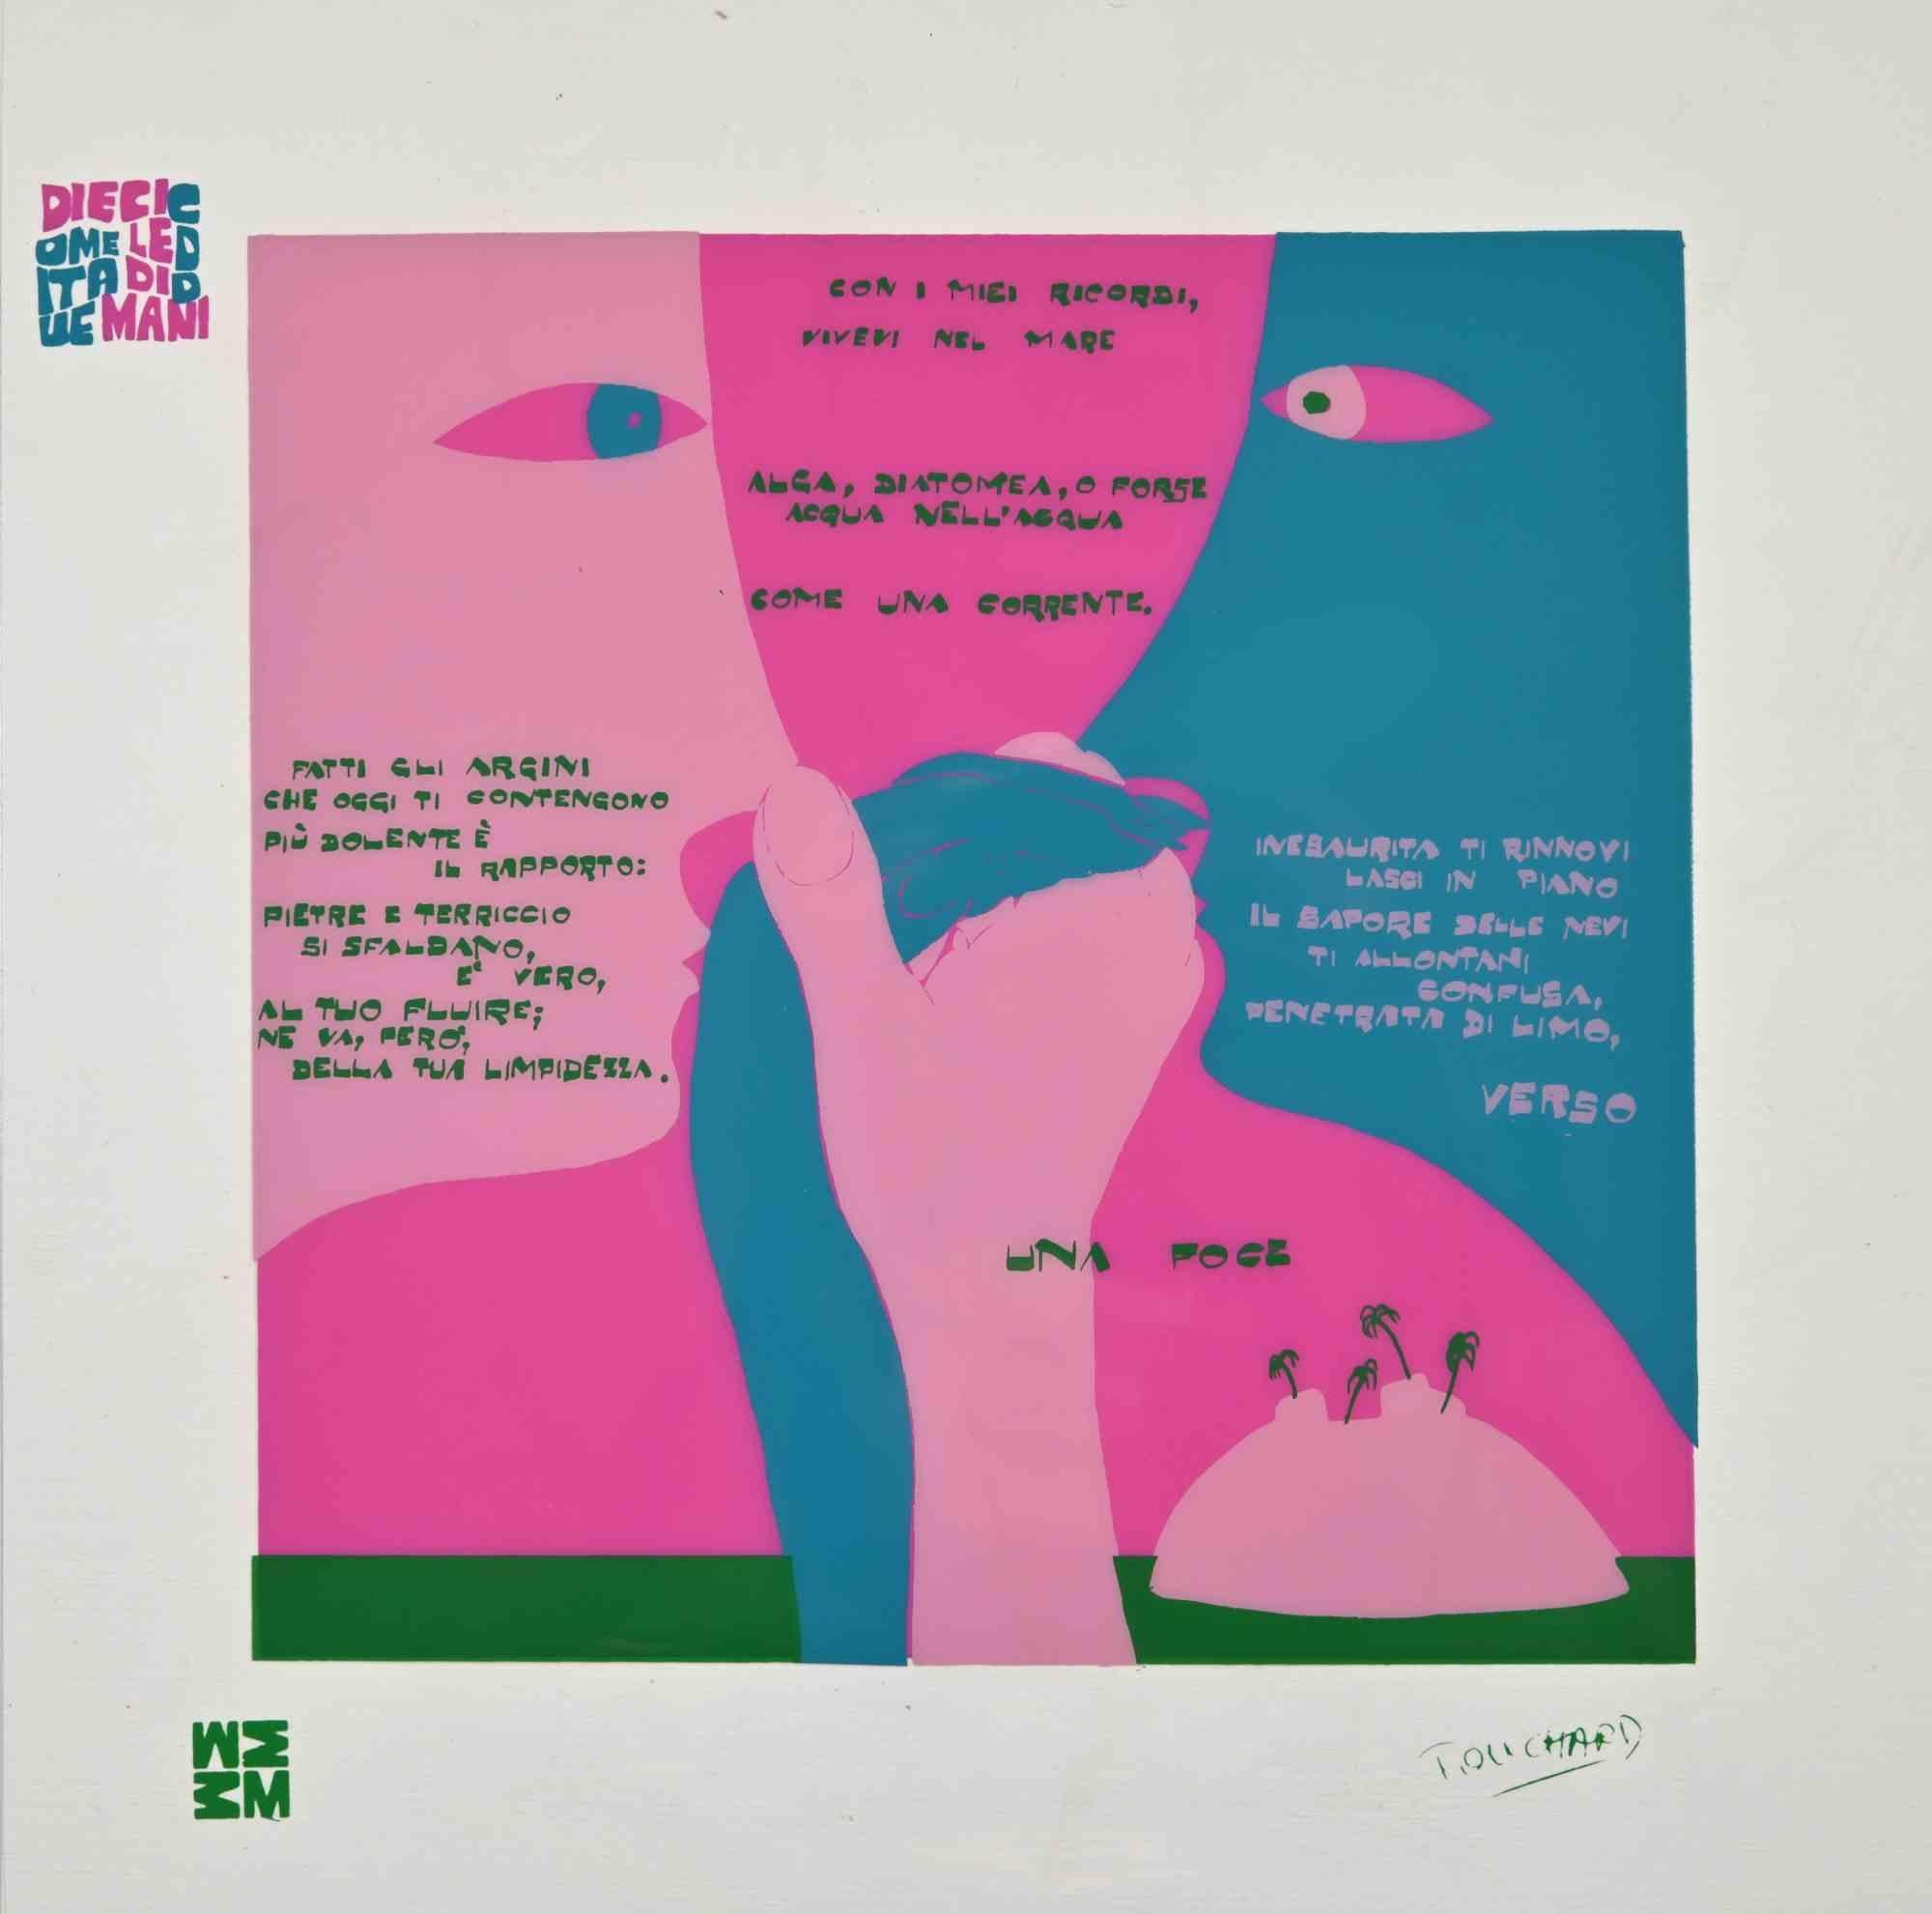 Diecicomeleditadiduemani - Screen Print on Acetate by Ennio Pouchard - 1973 For Sale 1